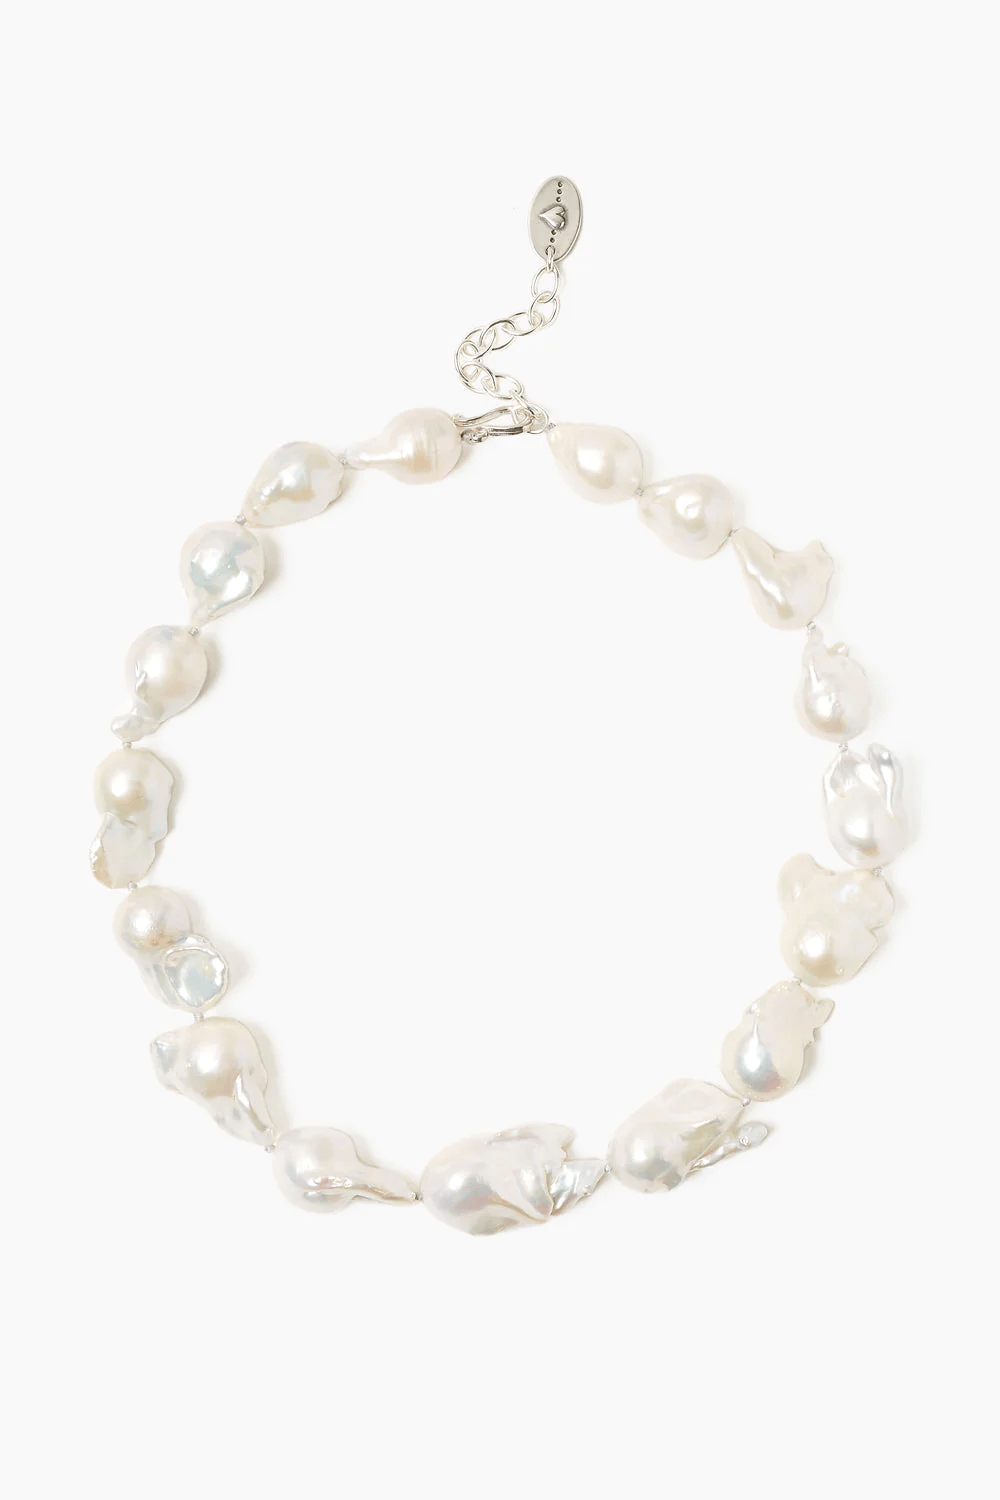 Chan Luu White Baroque Pearl Collar Necklace